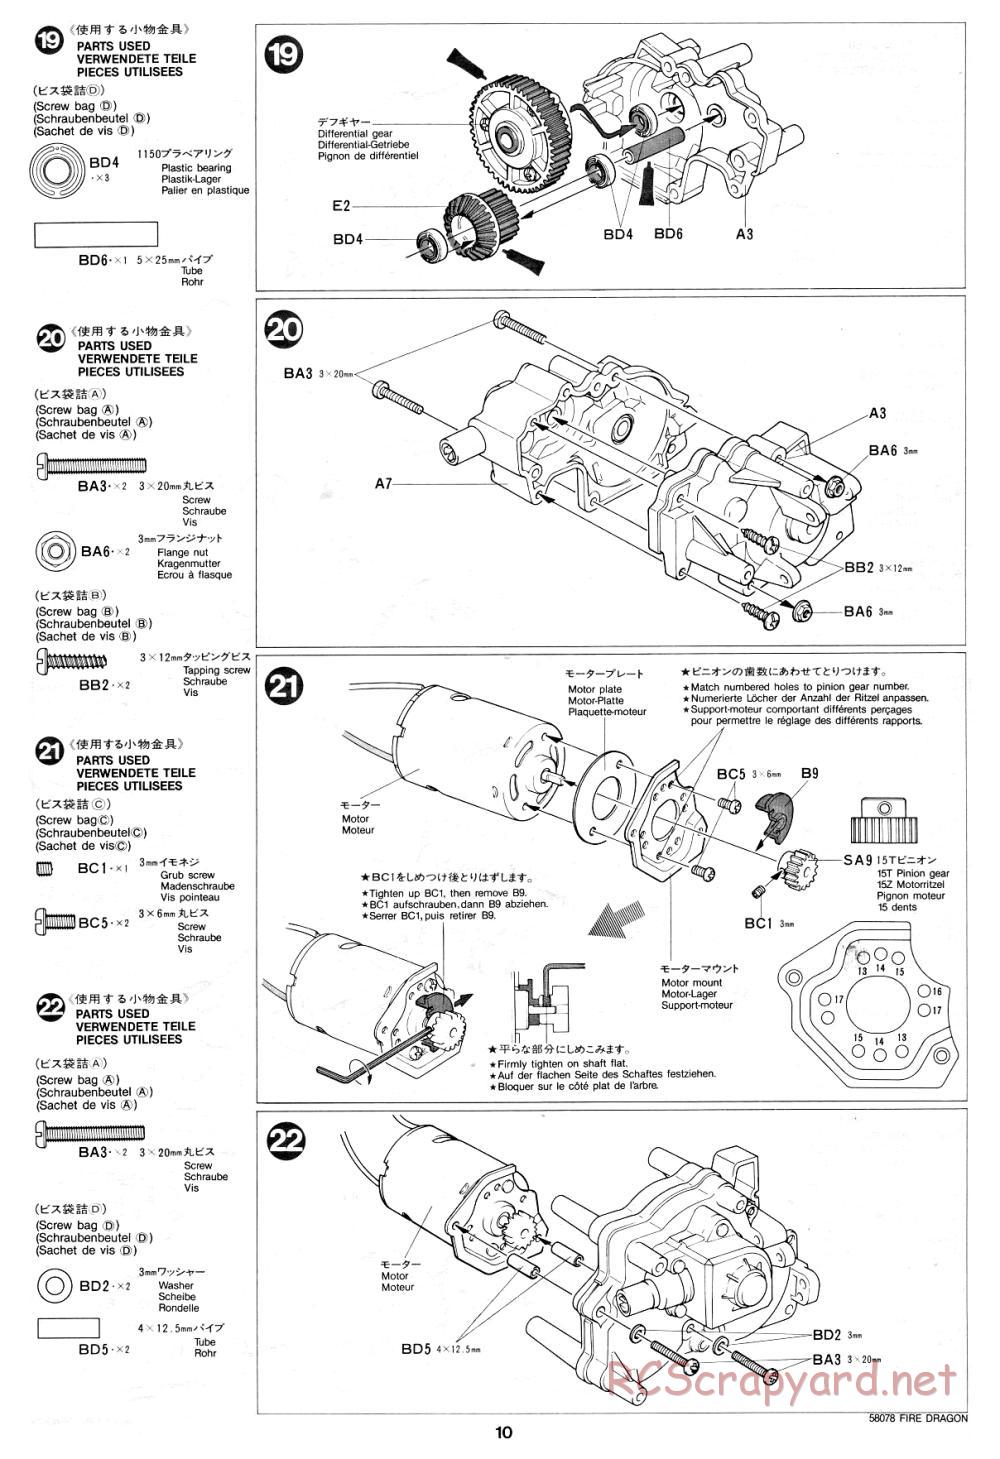 Tamiya - Fire Dragon - 58078 - Manual - Page 10